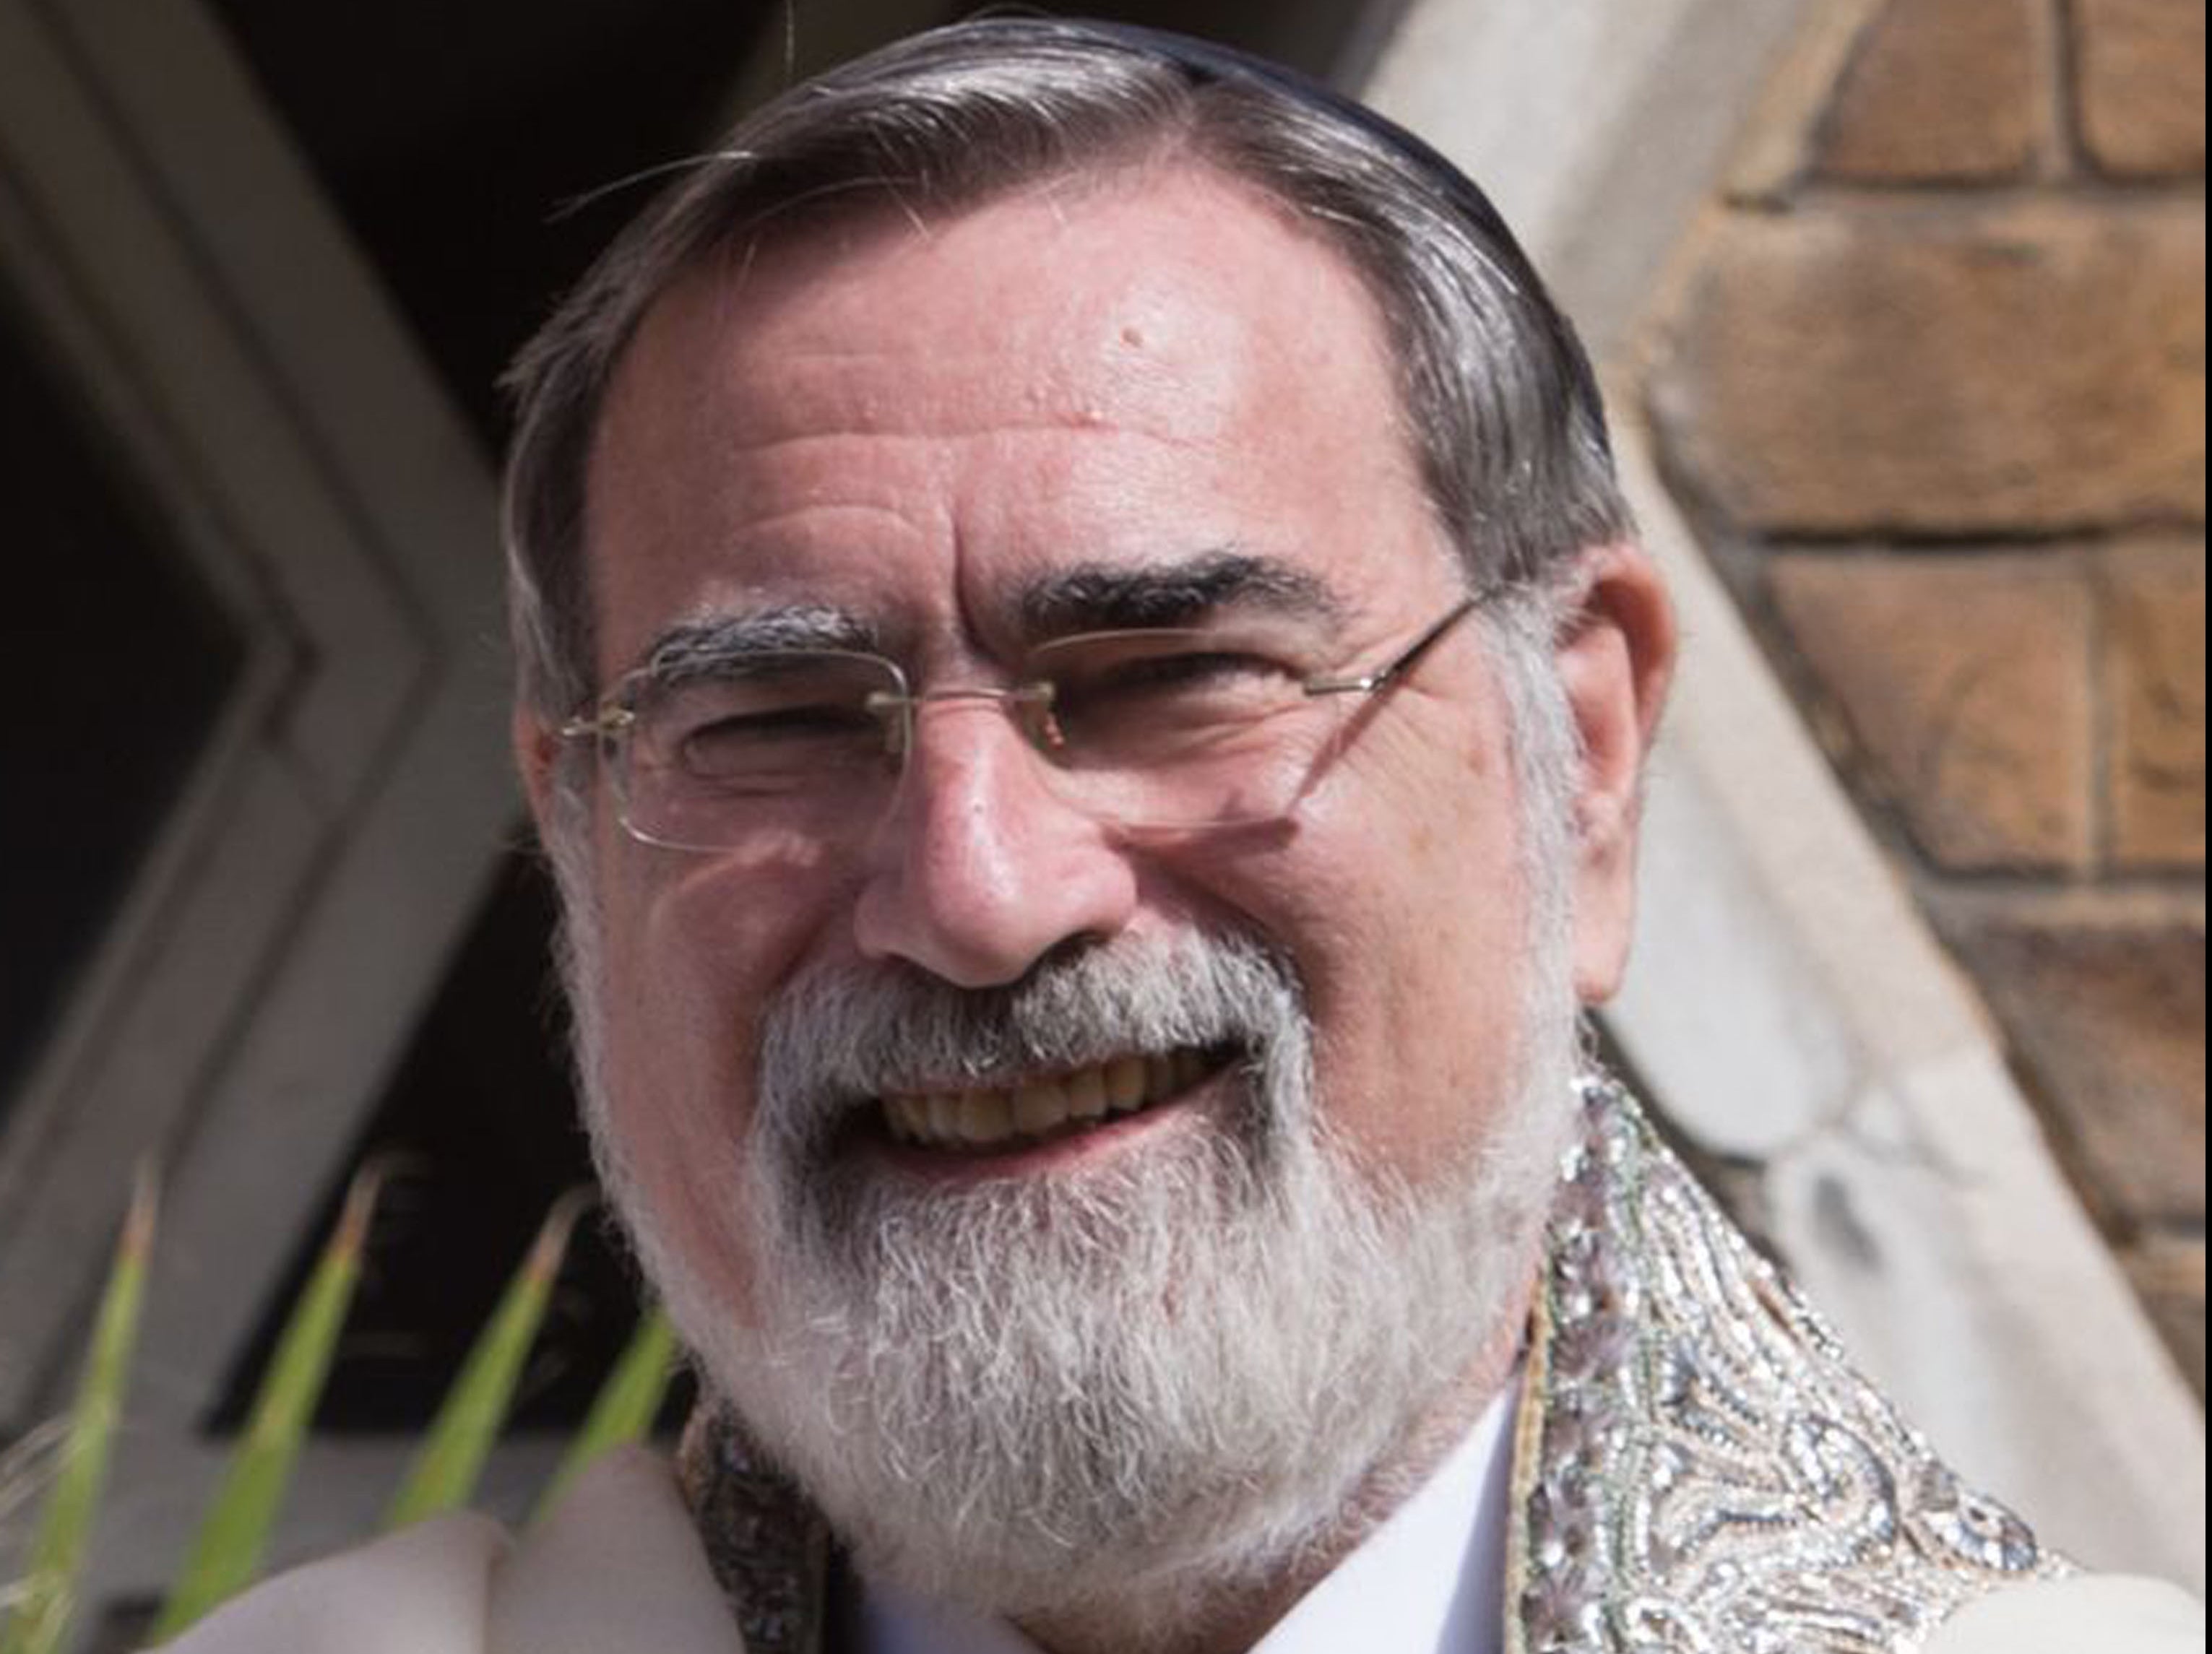 Former chief rabbi Lord Sacks died on Saturday morning